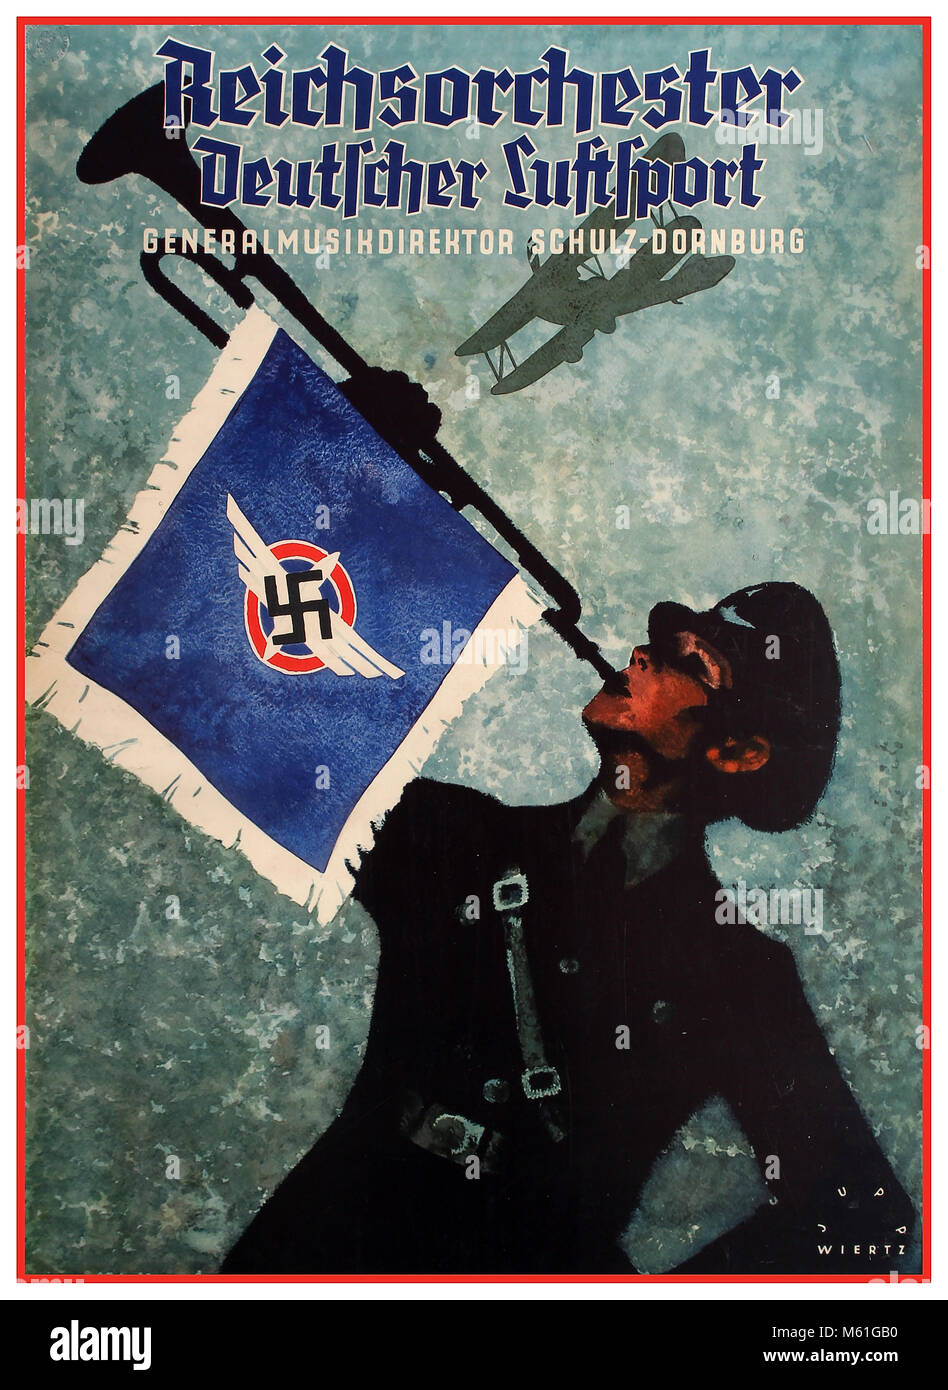 1930 Cartel de propaganda Nazi - Fuerzas Aéreas alemanas Reichs Orchestra cartel por Jupp Wiertz. Alemania REICHSORCHESTER DEUTCHER LUFTSPORT Foto de stock